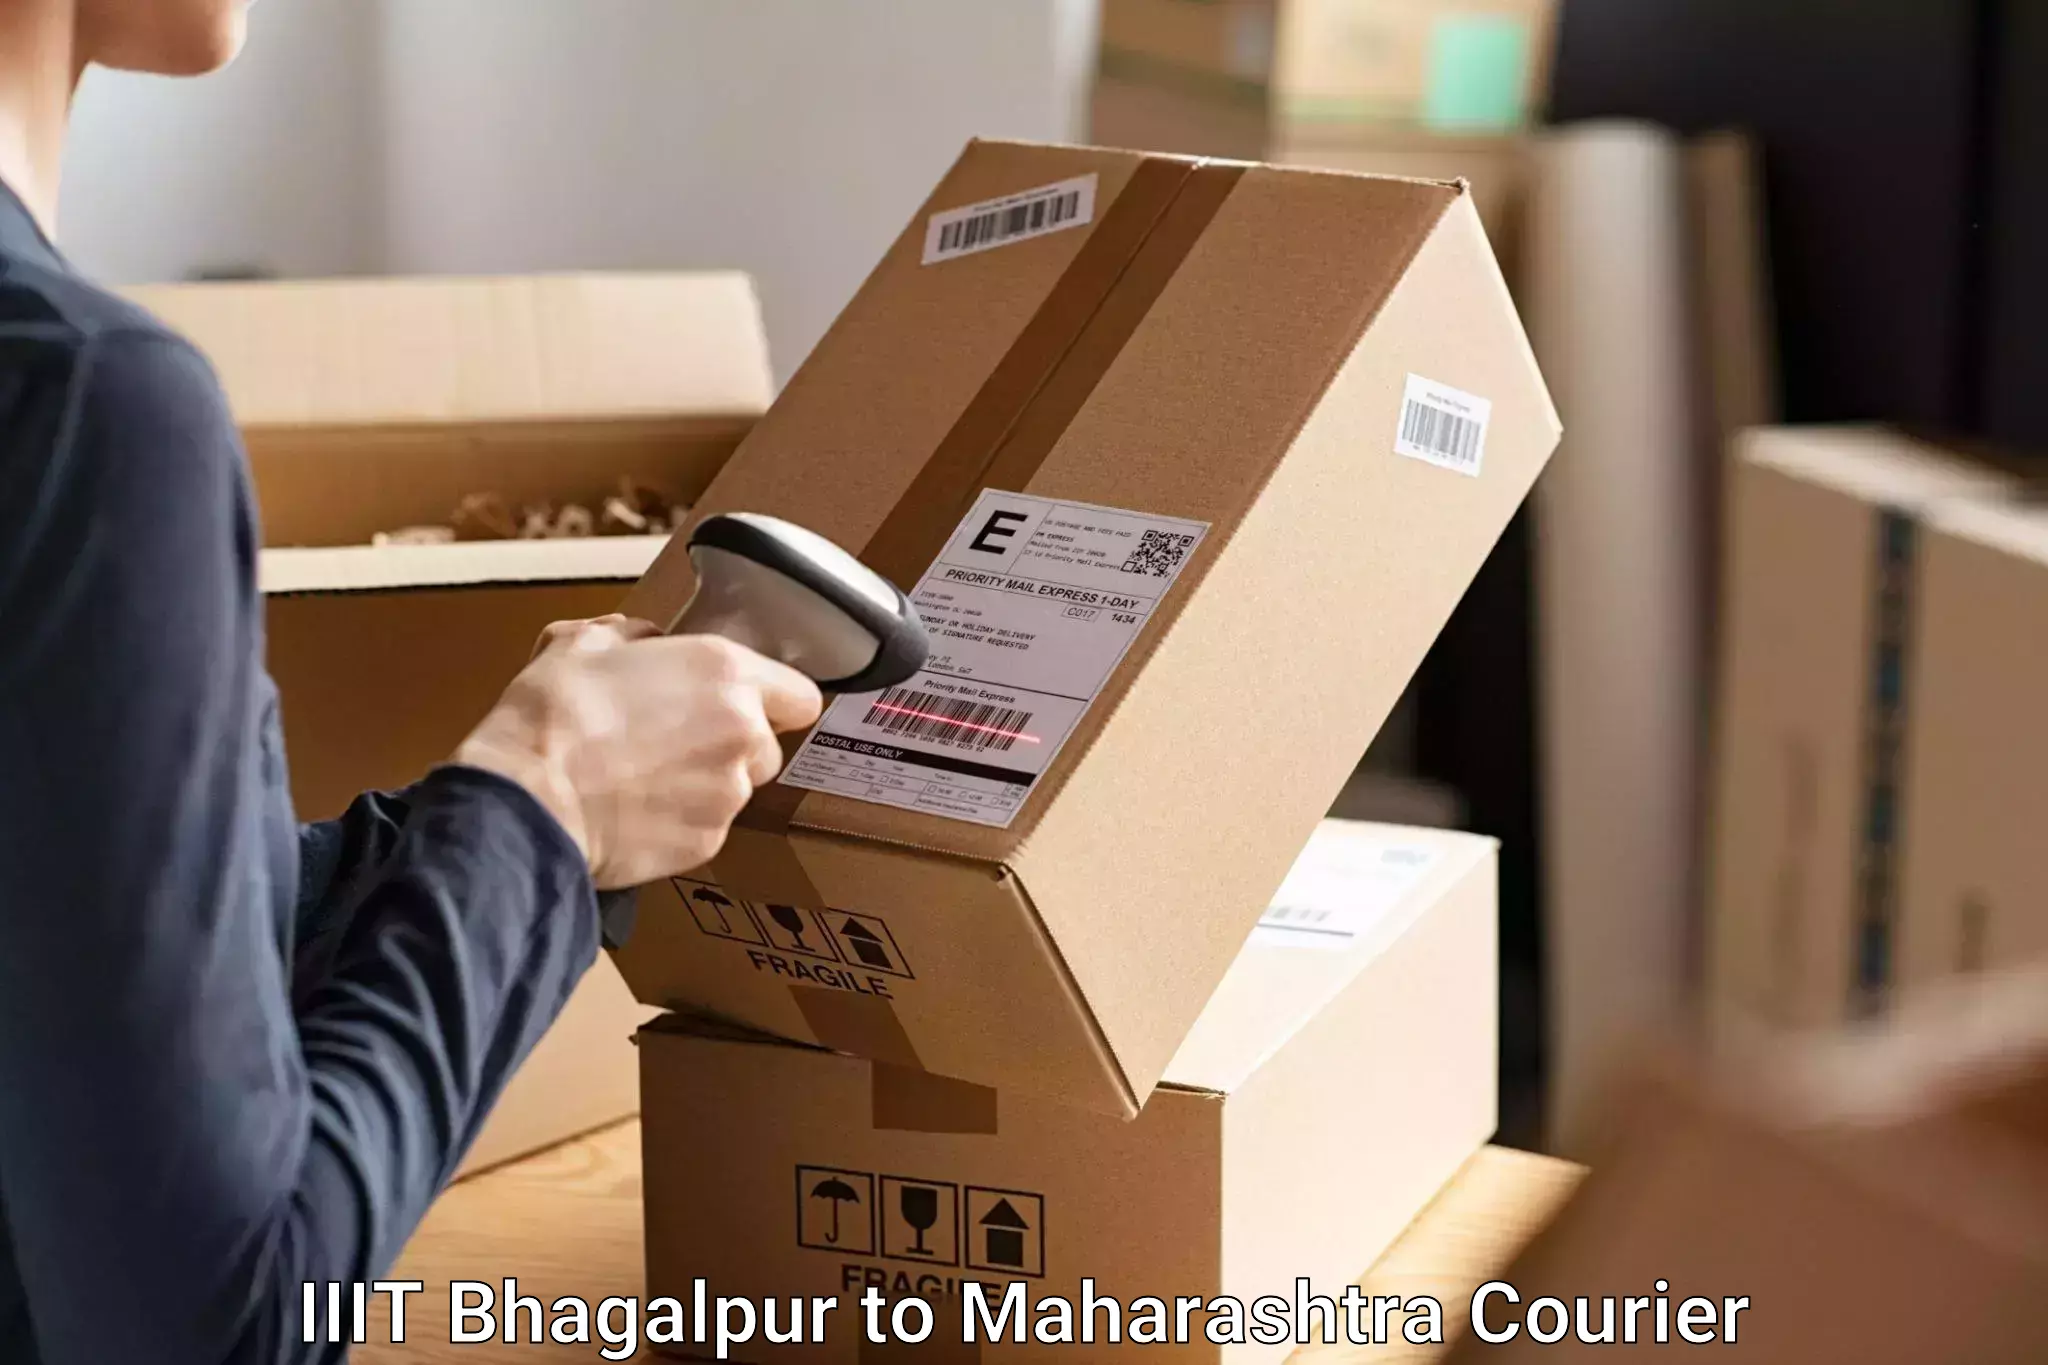 Baggage transport technology IIIT Bhagalpur to Pune